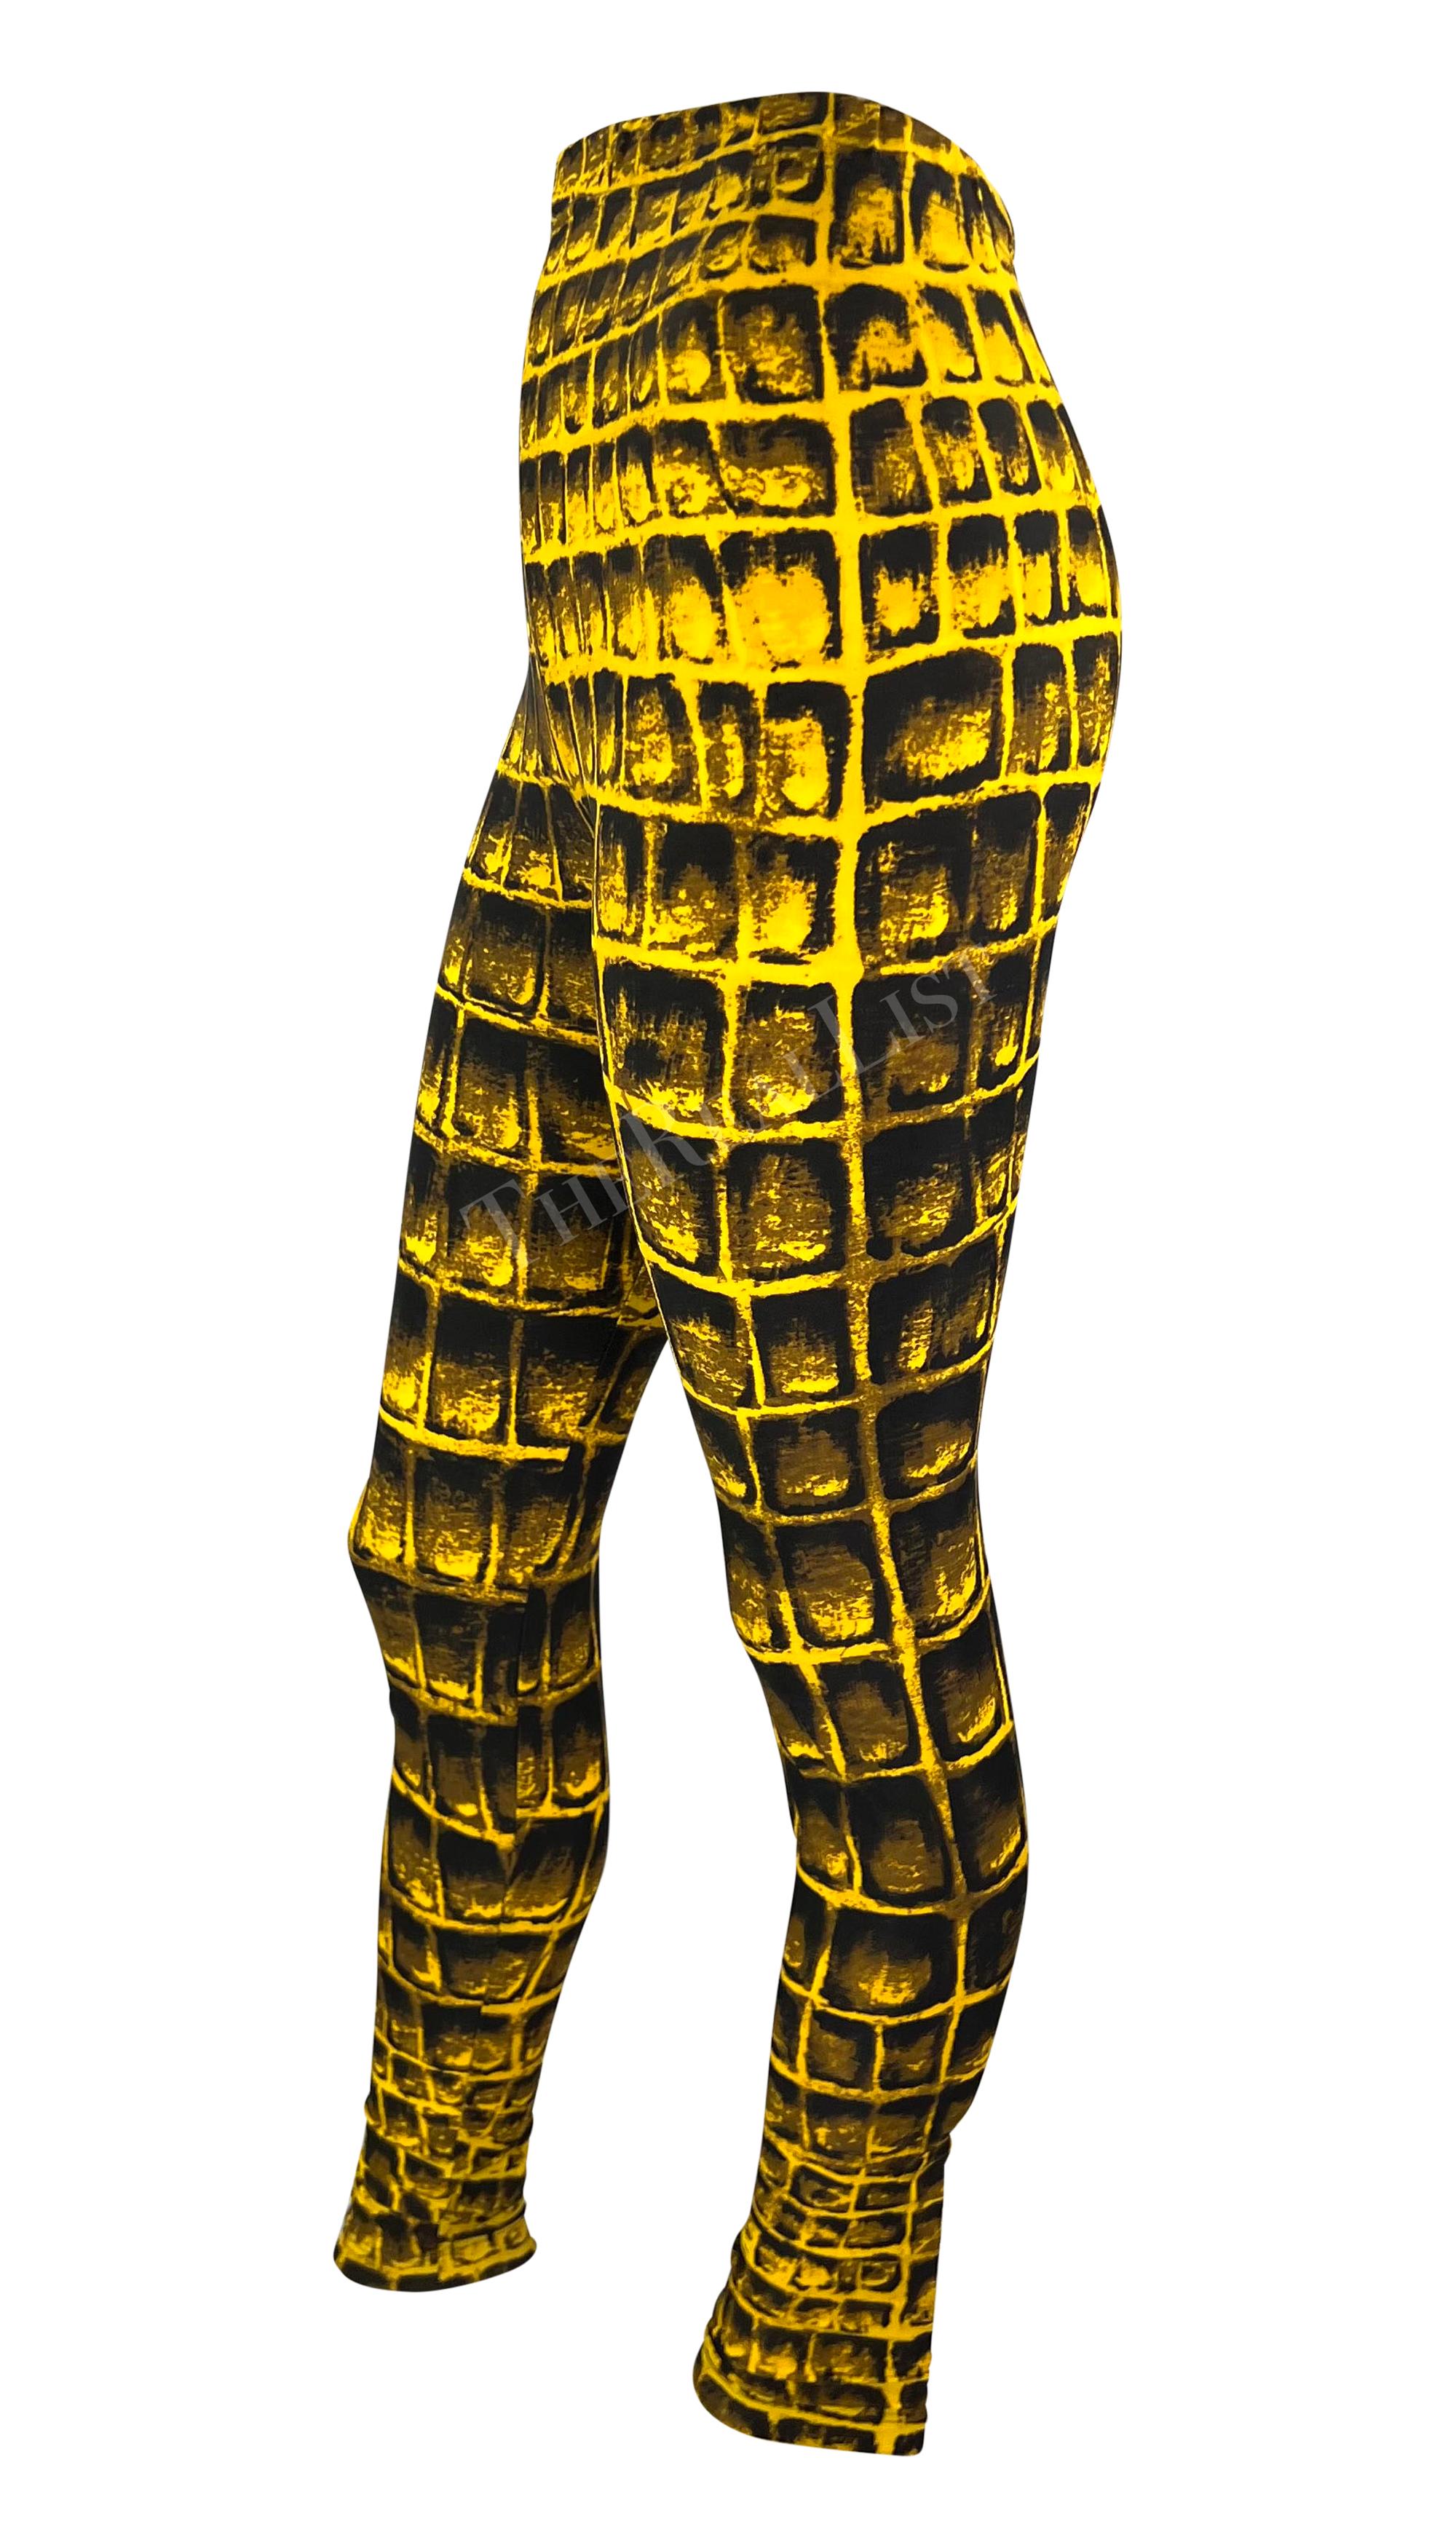 S/S 1992 Gianni Versace Runway Yellow Black Crocodile Print Leggings Tights For Sale 3